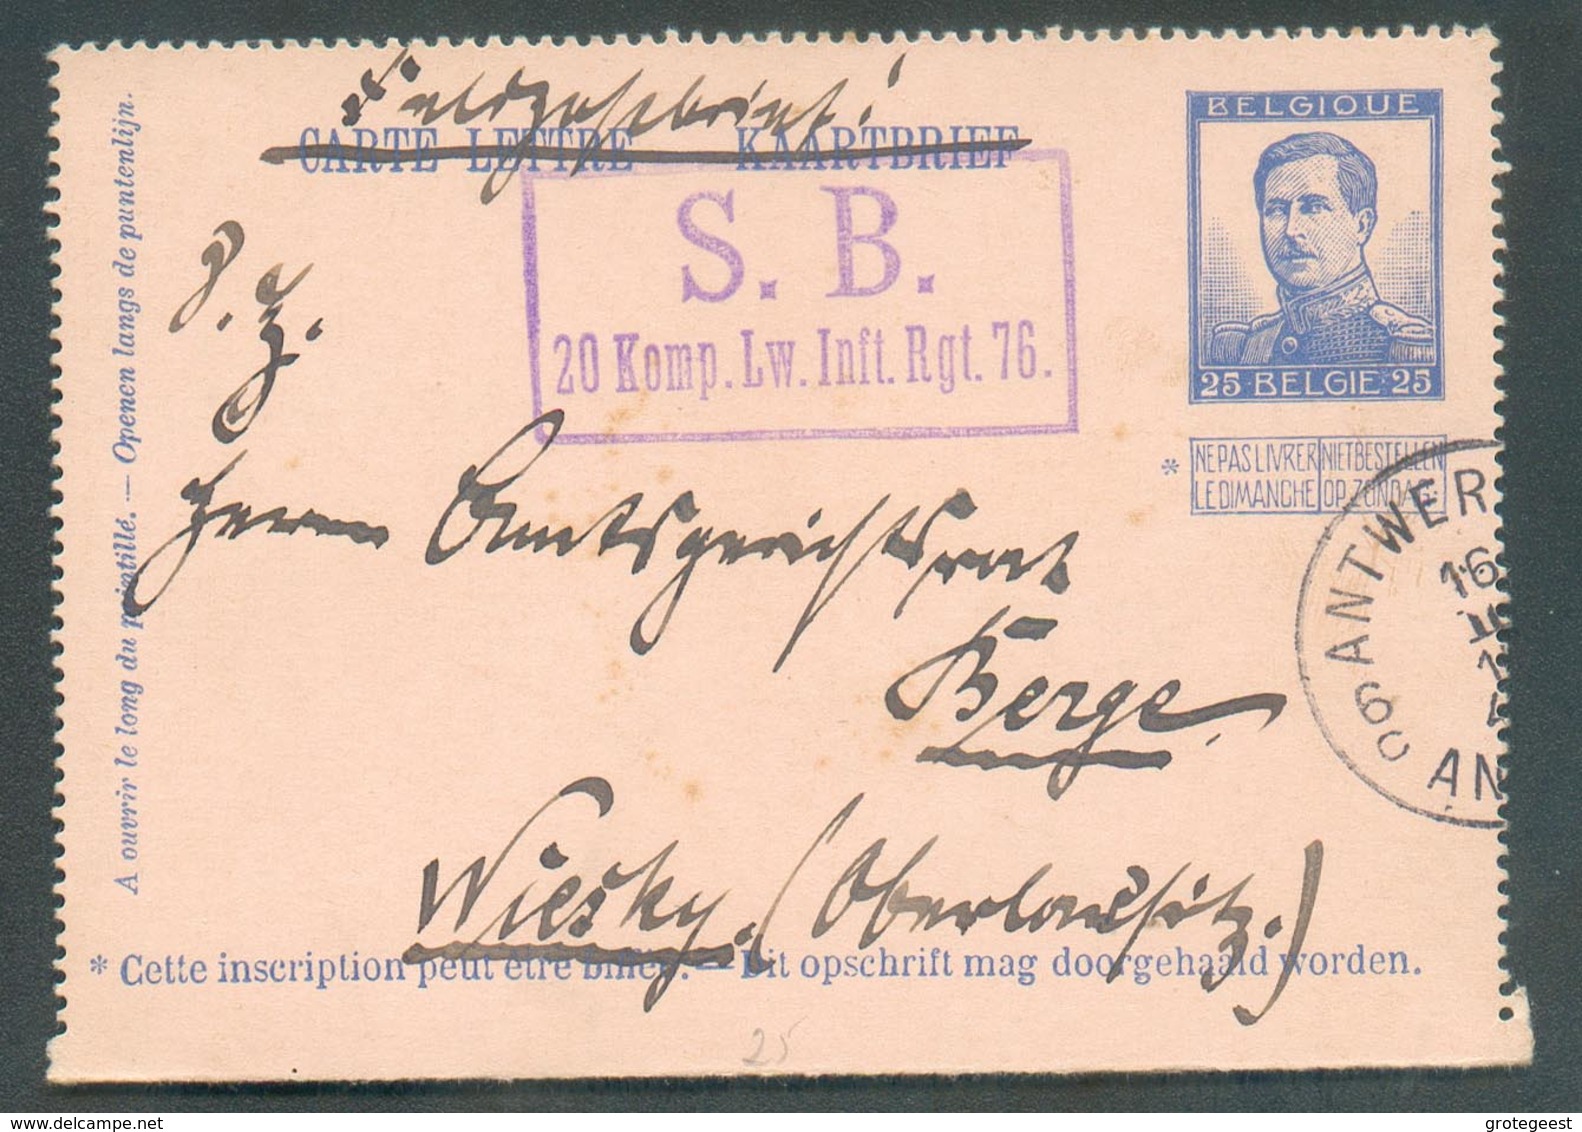 E.P. Carte-lettre 25c. Pellens Obl. Sc ANTWERPEN 6 Du 16-II-1915 En Feldpostbrief + Griffe Violette S.B. 20.Komp.Lw.Infl - Cartas-Letras